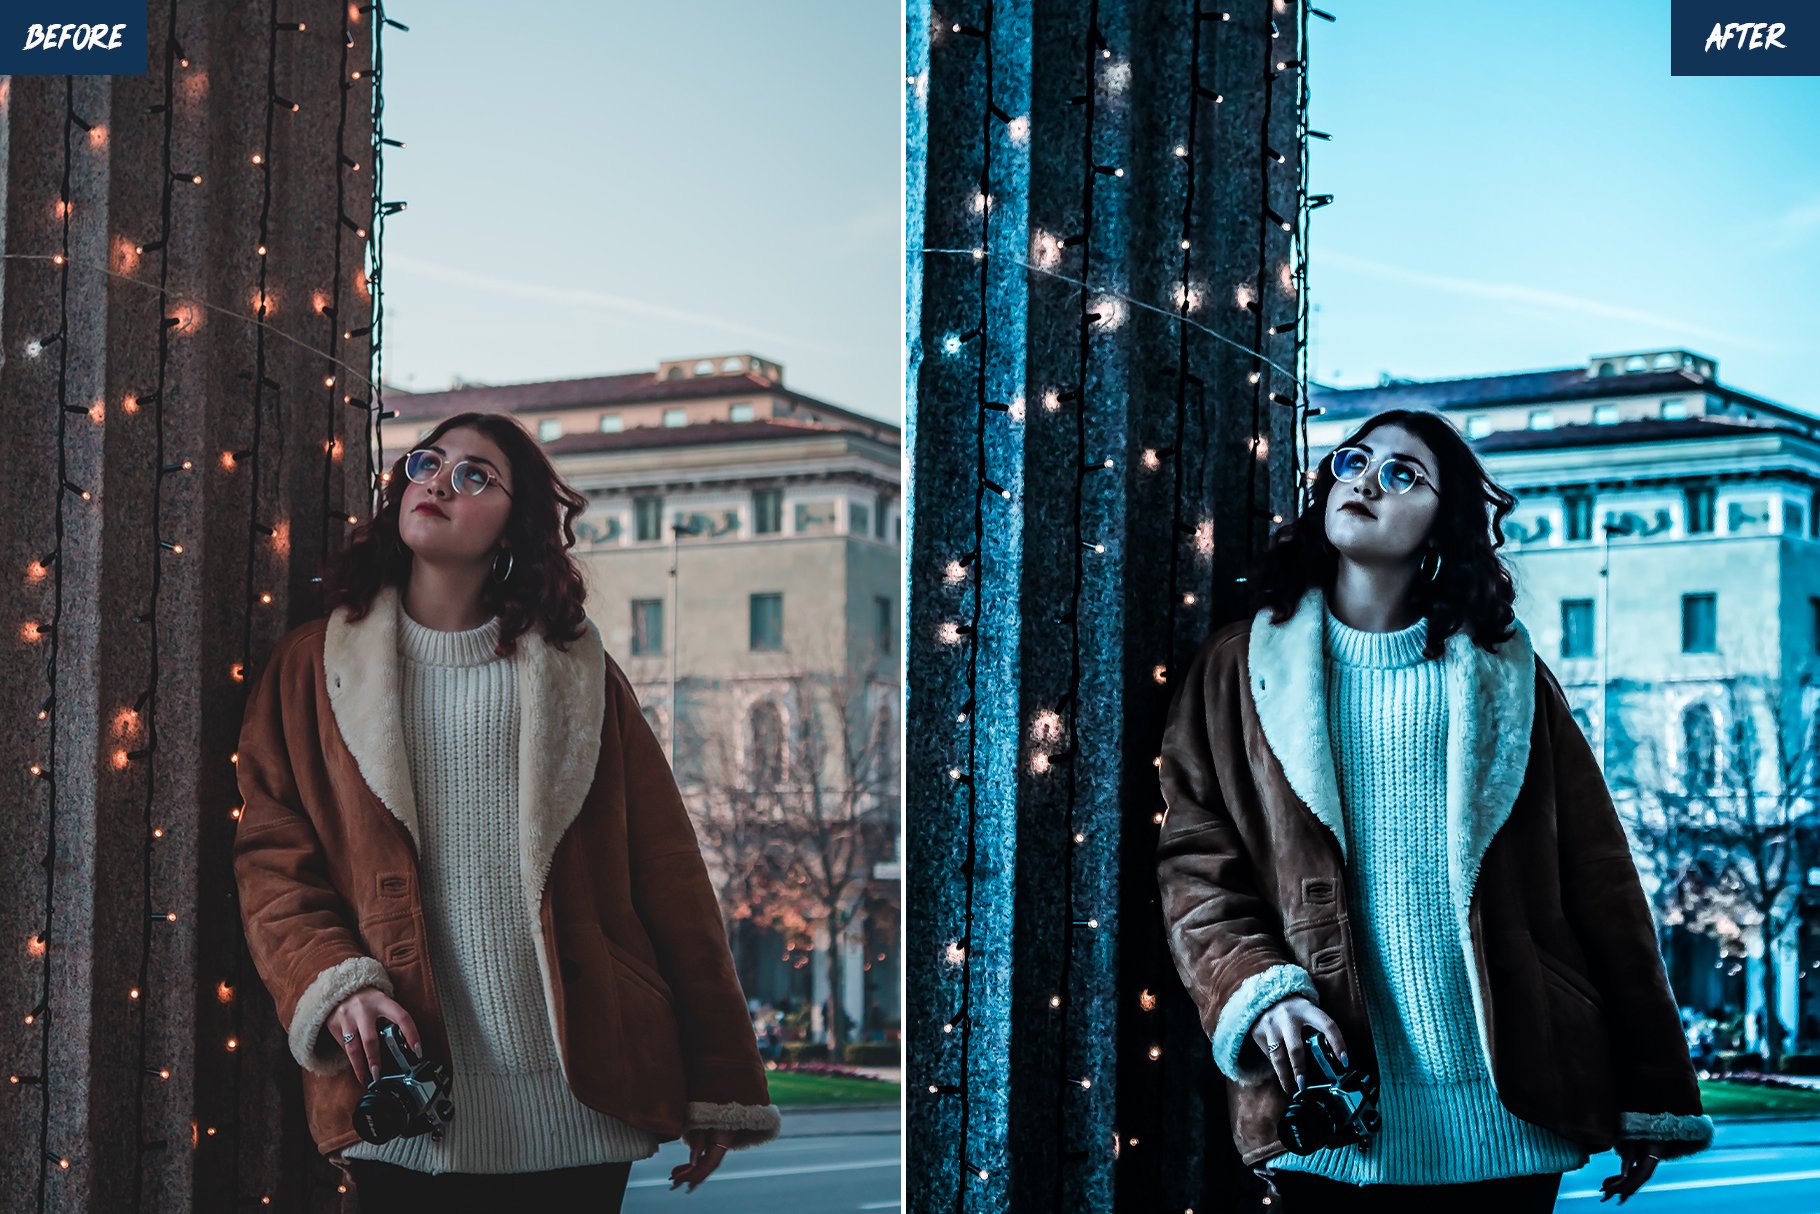 urban cinematic portrait lightroom presets for mobile and desktop before and after 04 364